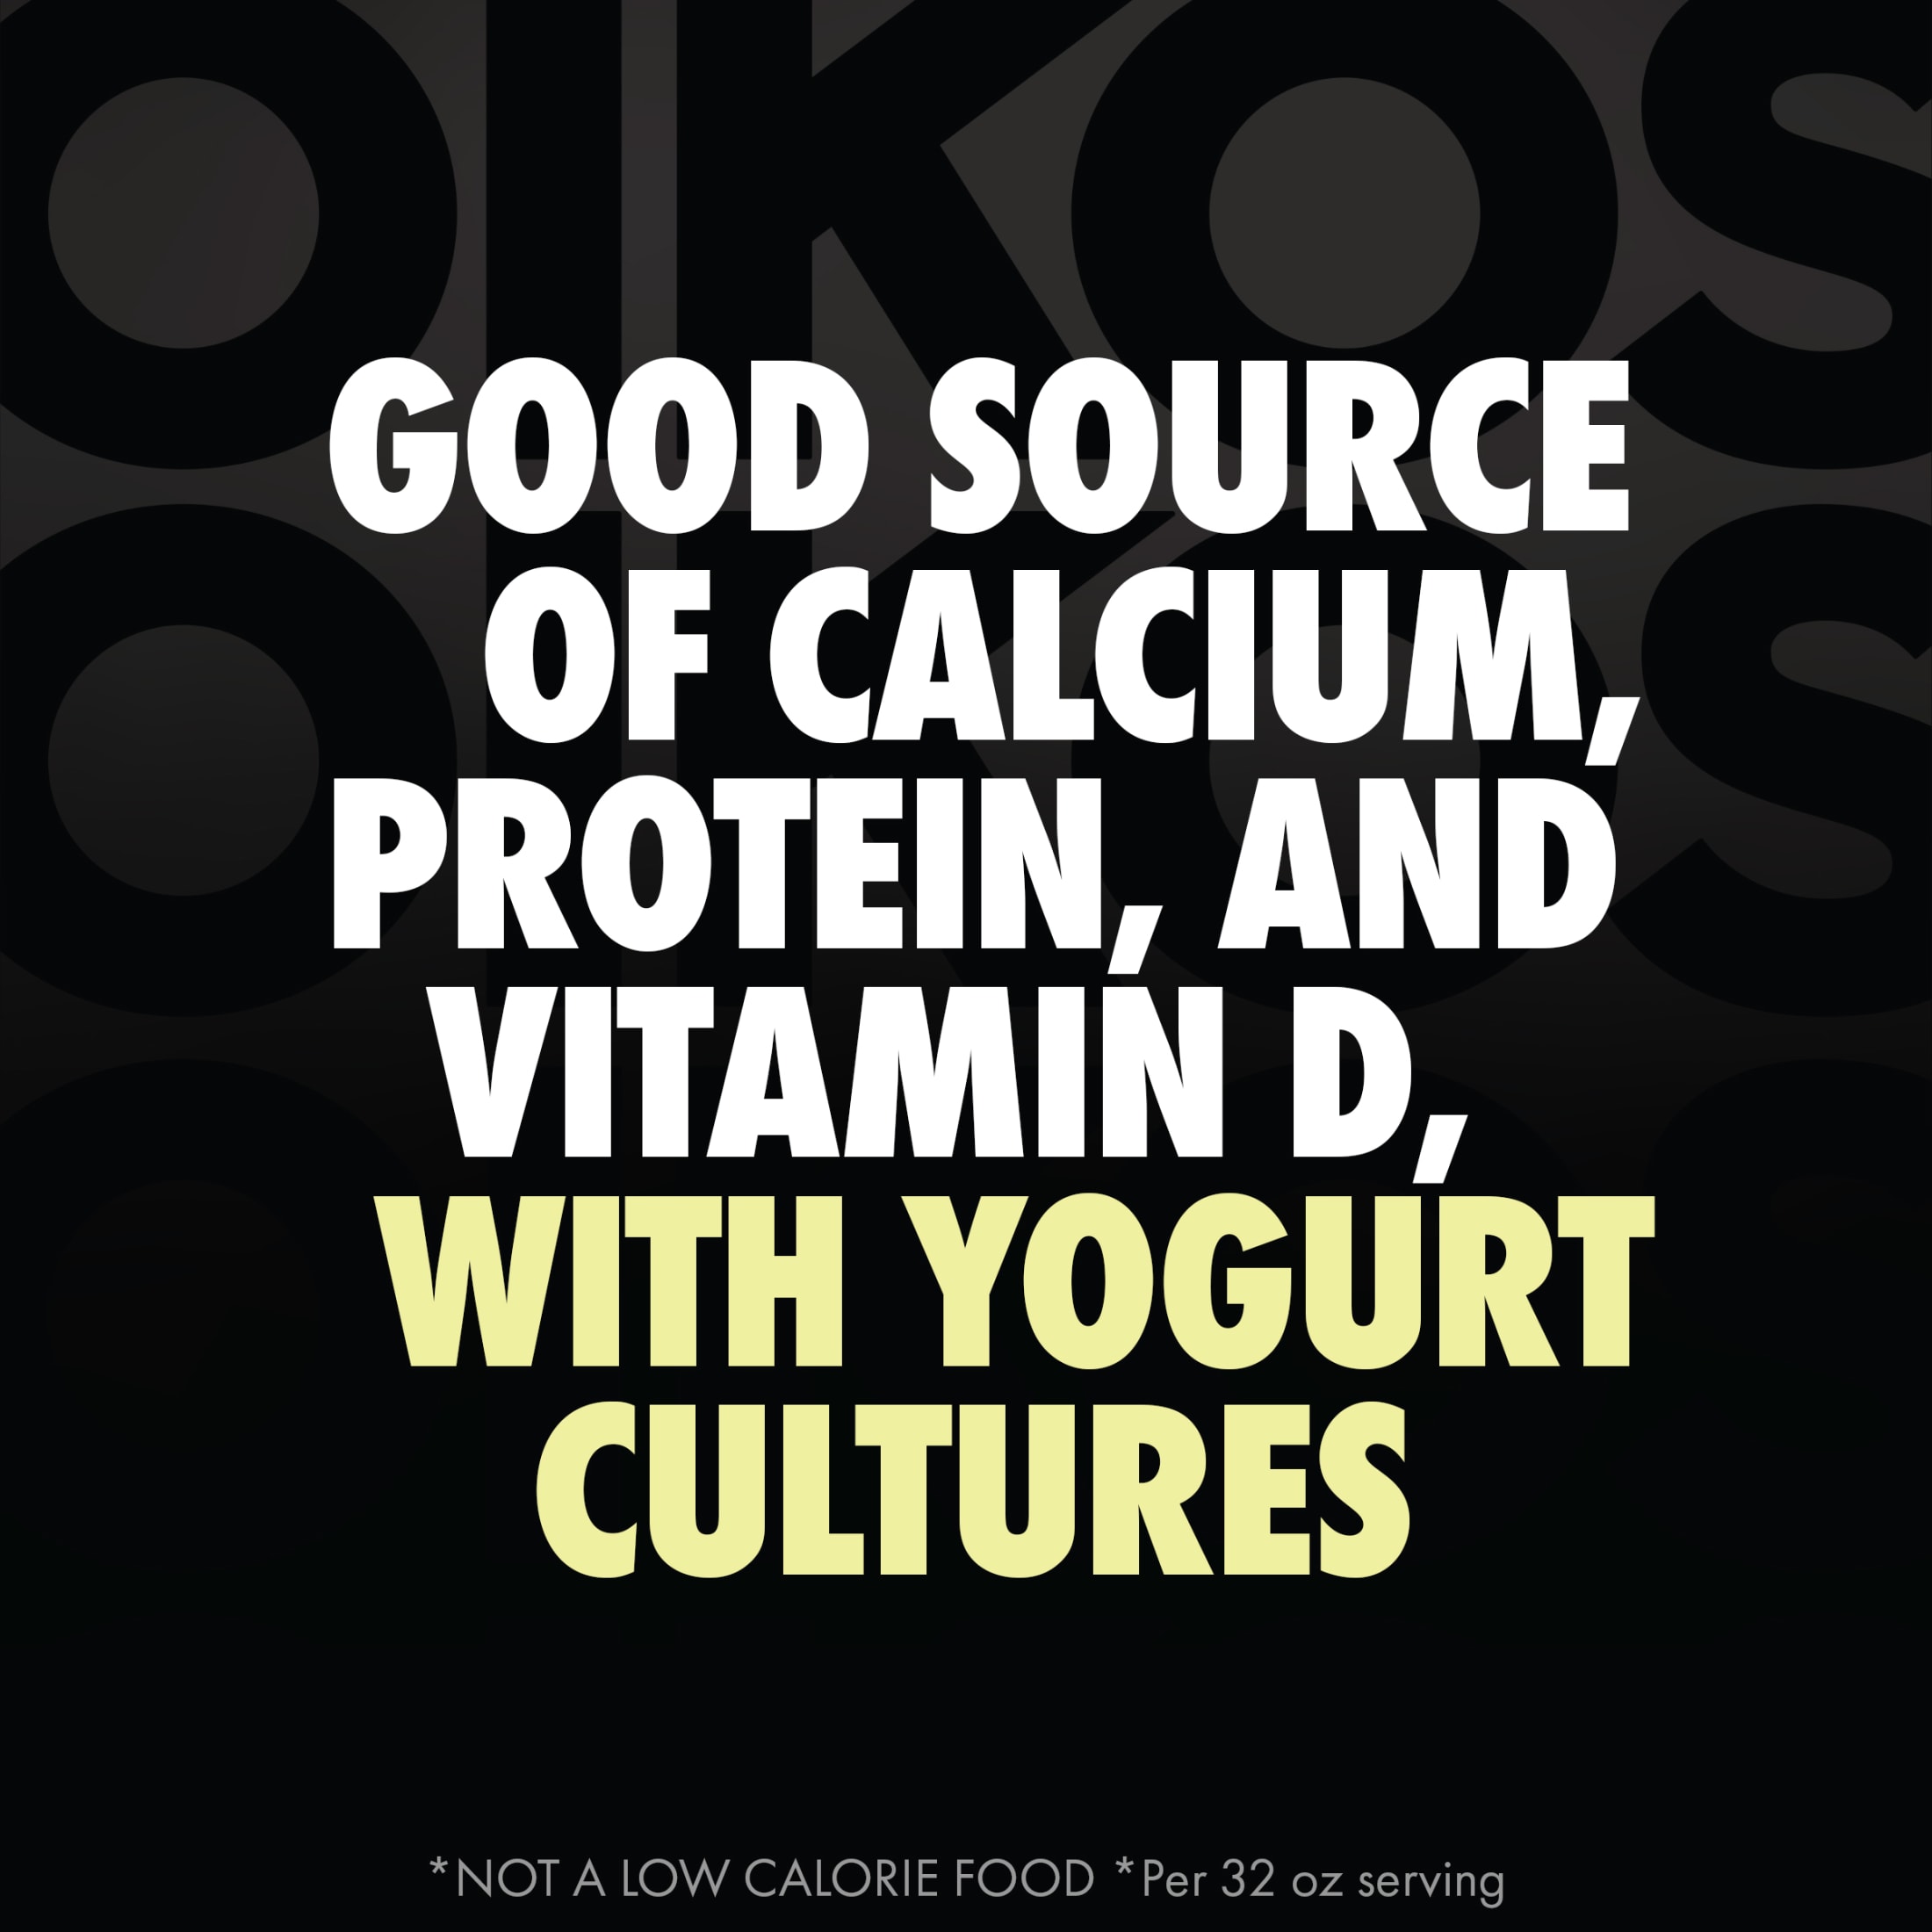 Oikos Triple Zero 17g Protein, 0g Added Sugar, Fat Free Vanilla Greek Yogurt Tub, 32 oz - image 5 of 11